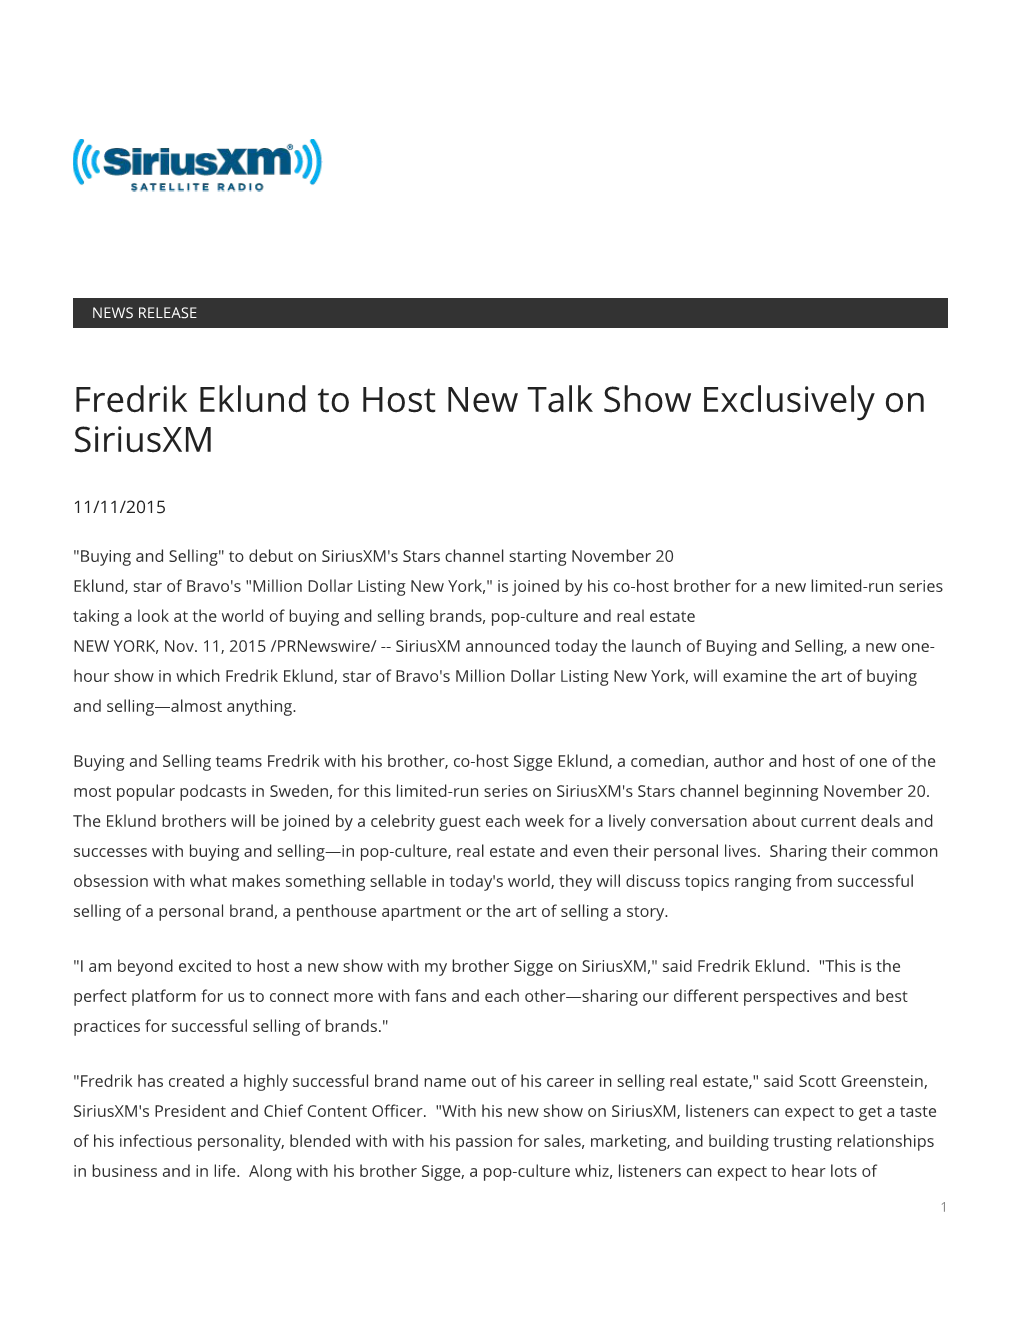 Fredrik Eklund to Host New Talk Show Exclusively on Siriusxm